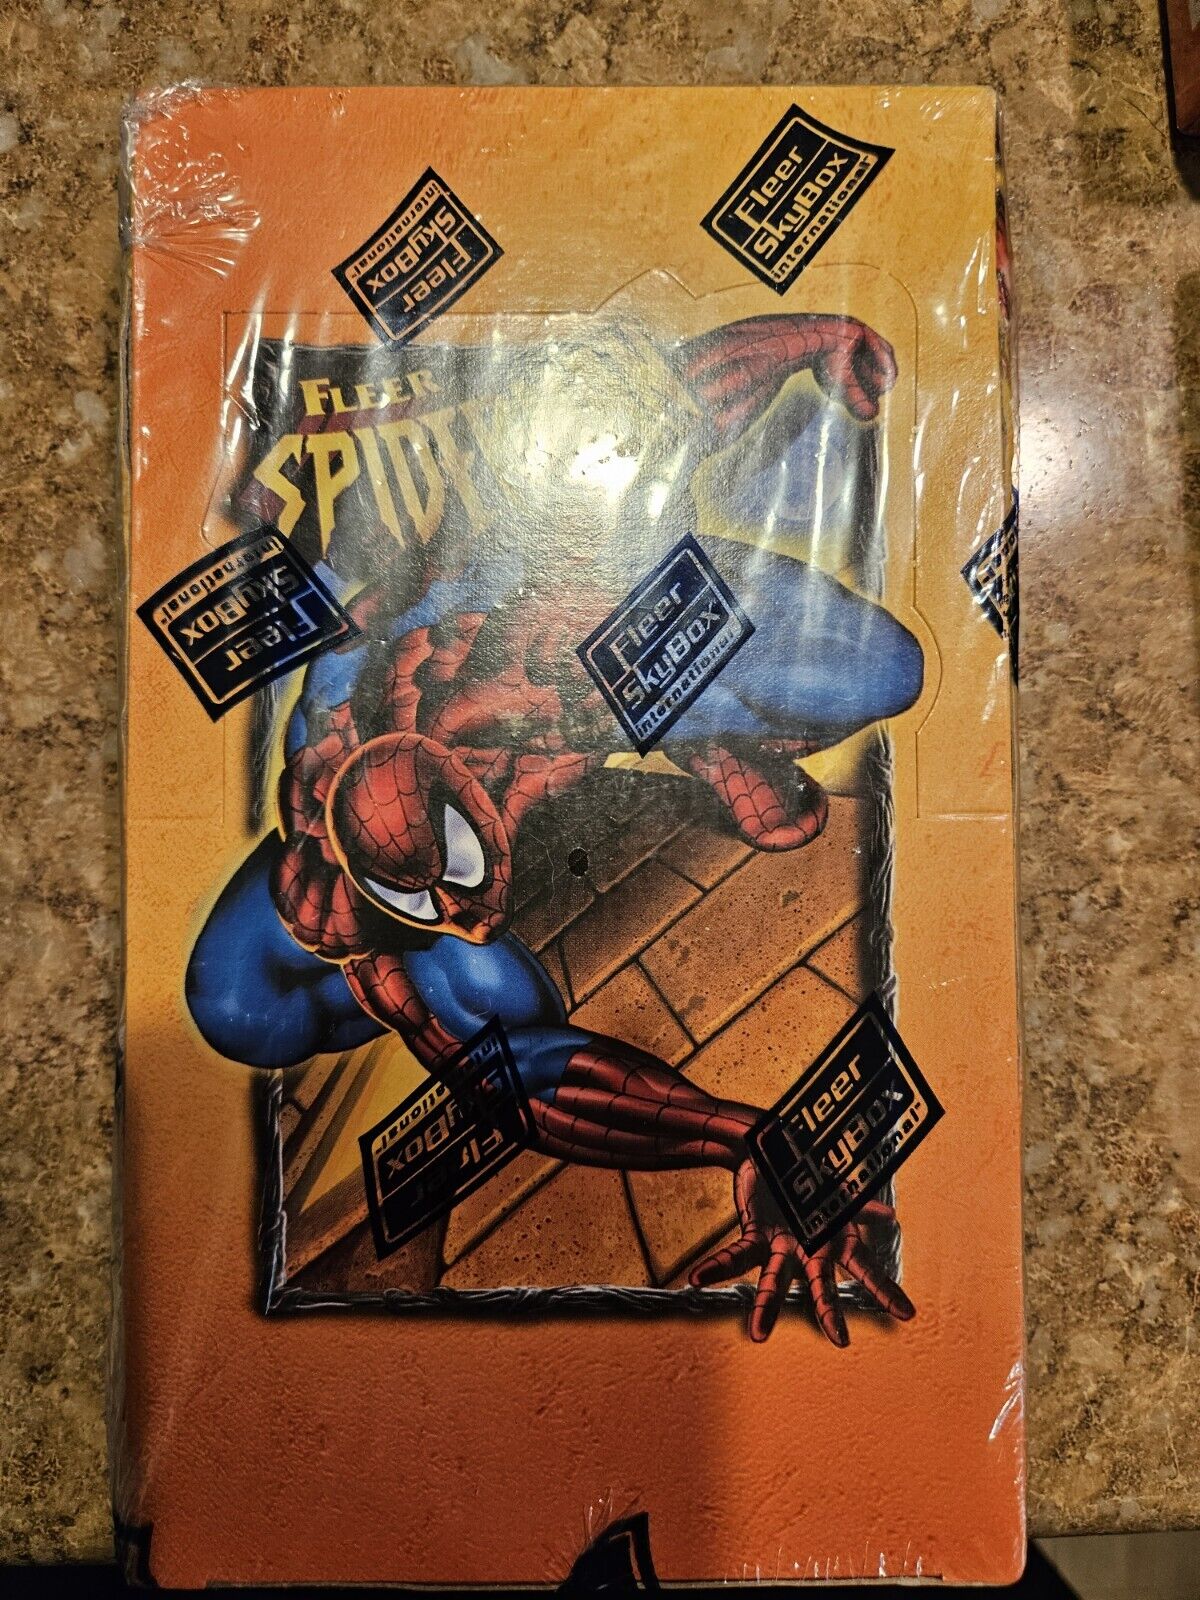 1997 Fleer Spider-Man Fleer Skybox Factory Sealed Hobby Box Spider-Man Cards NIB